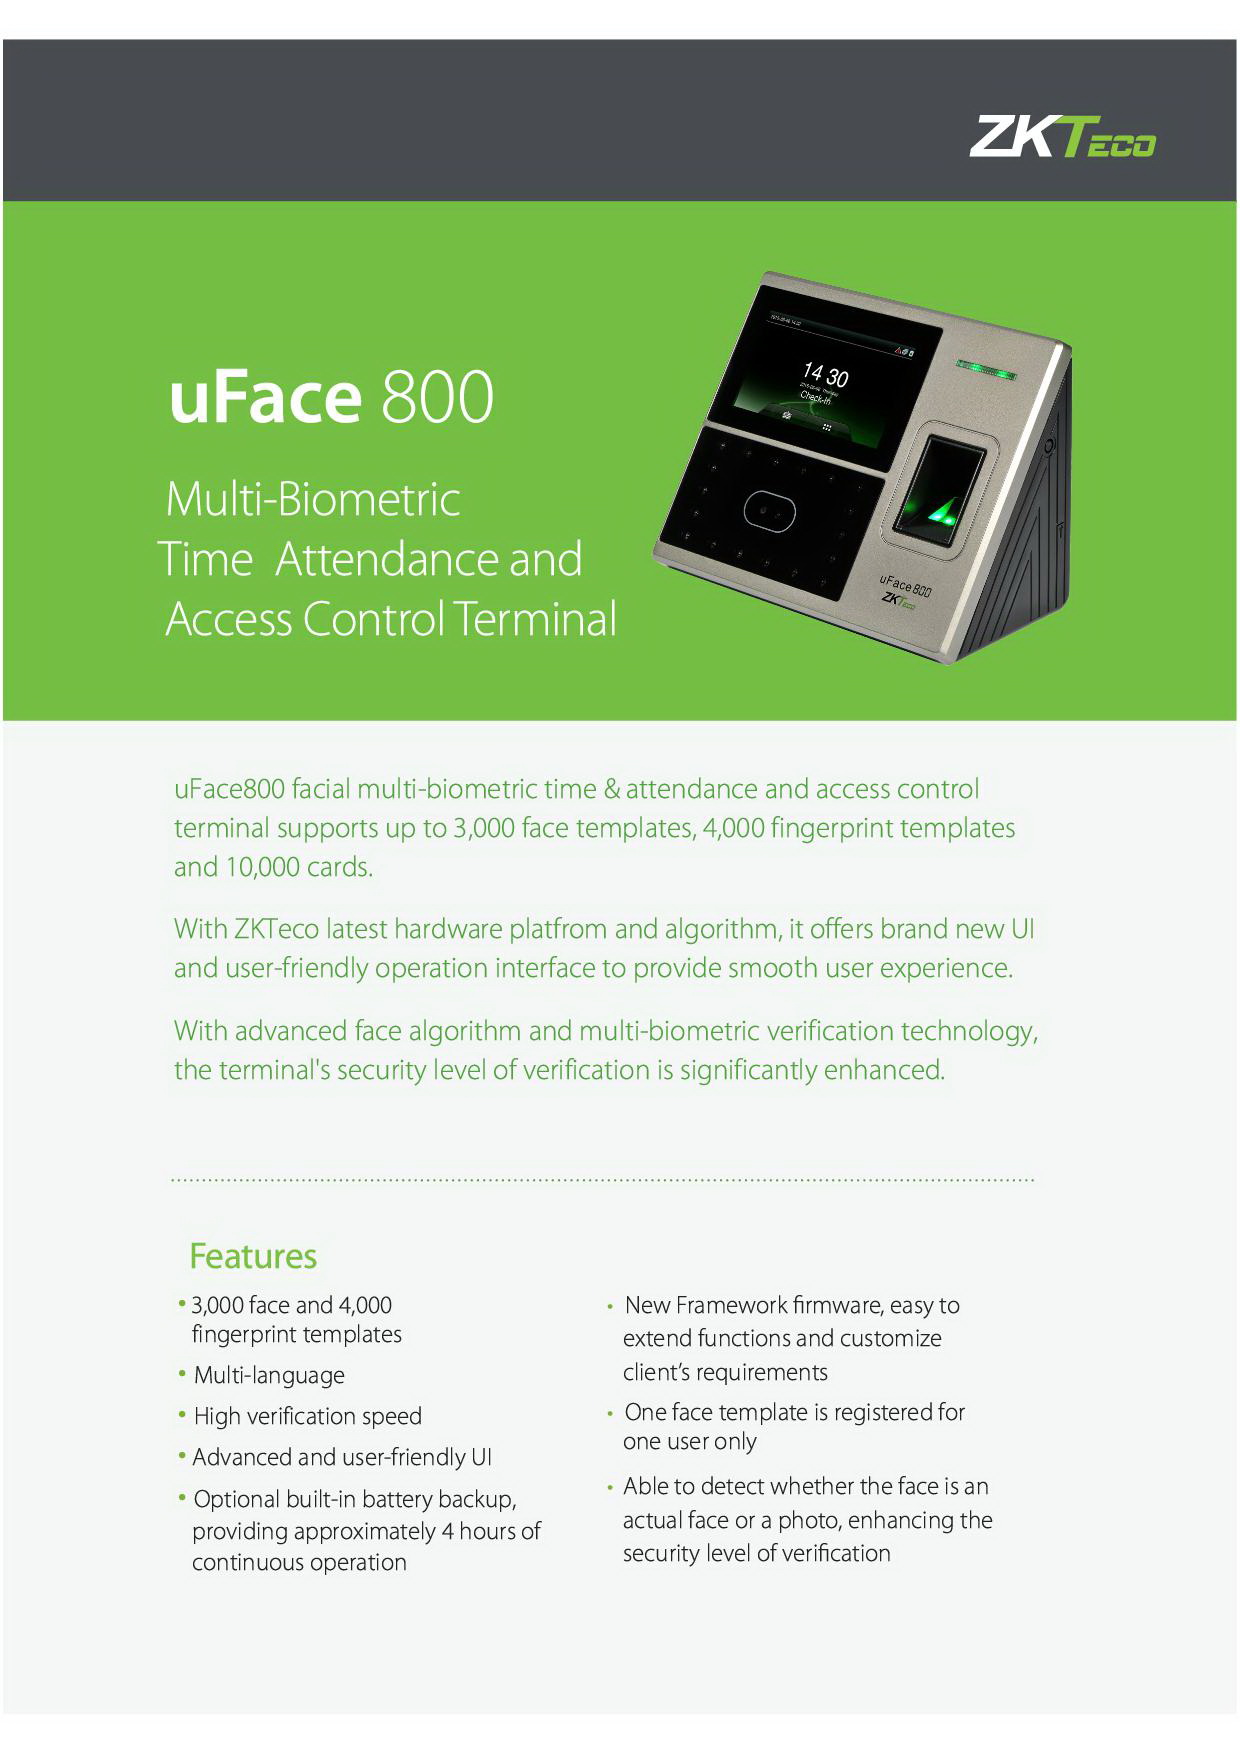 UFace 800